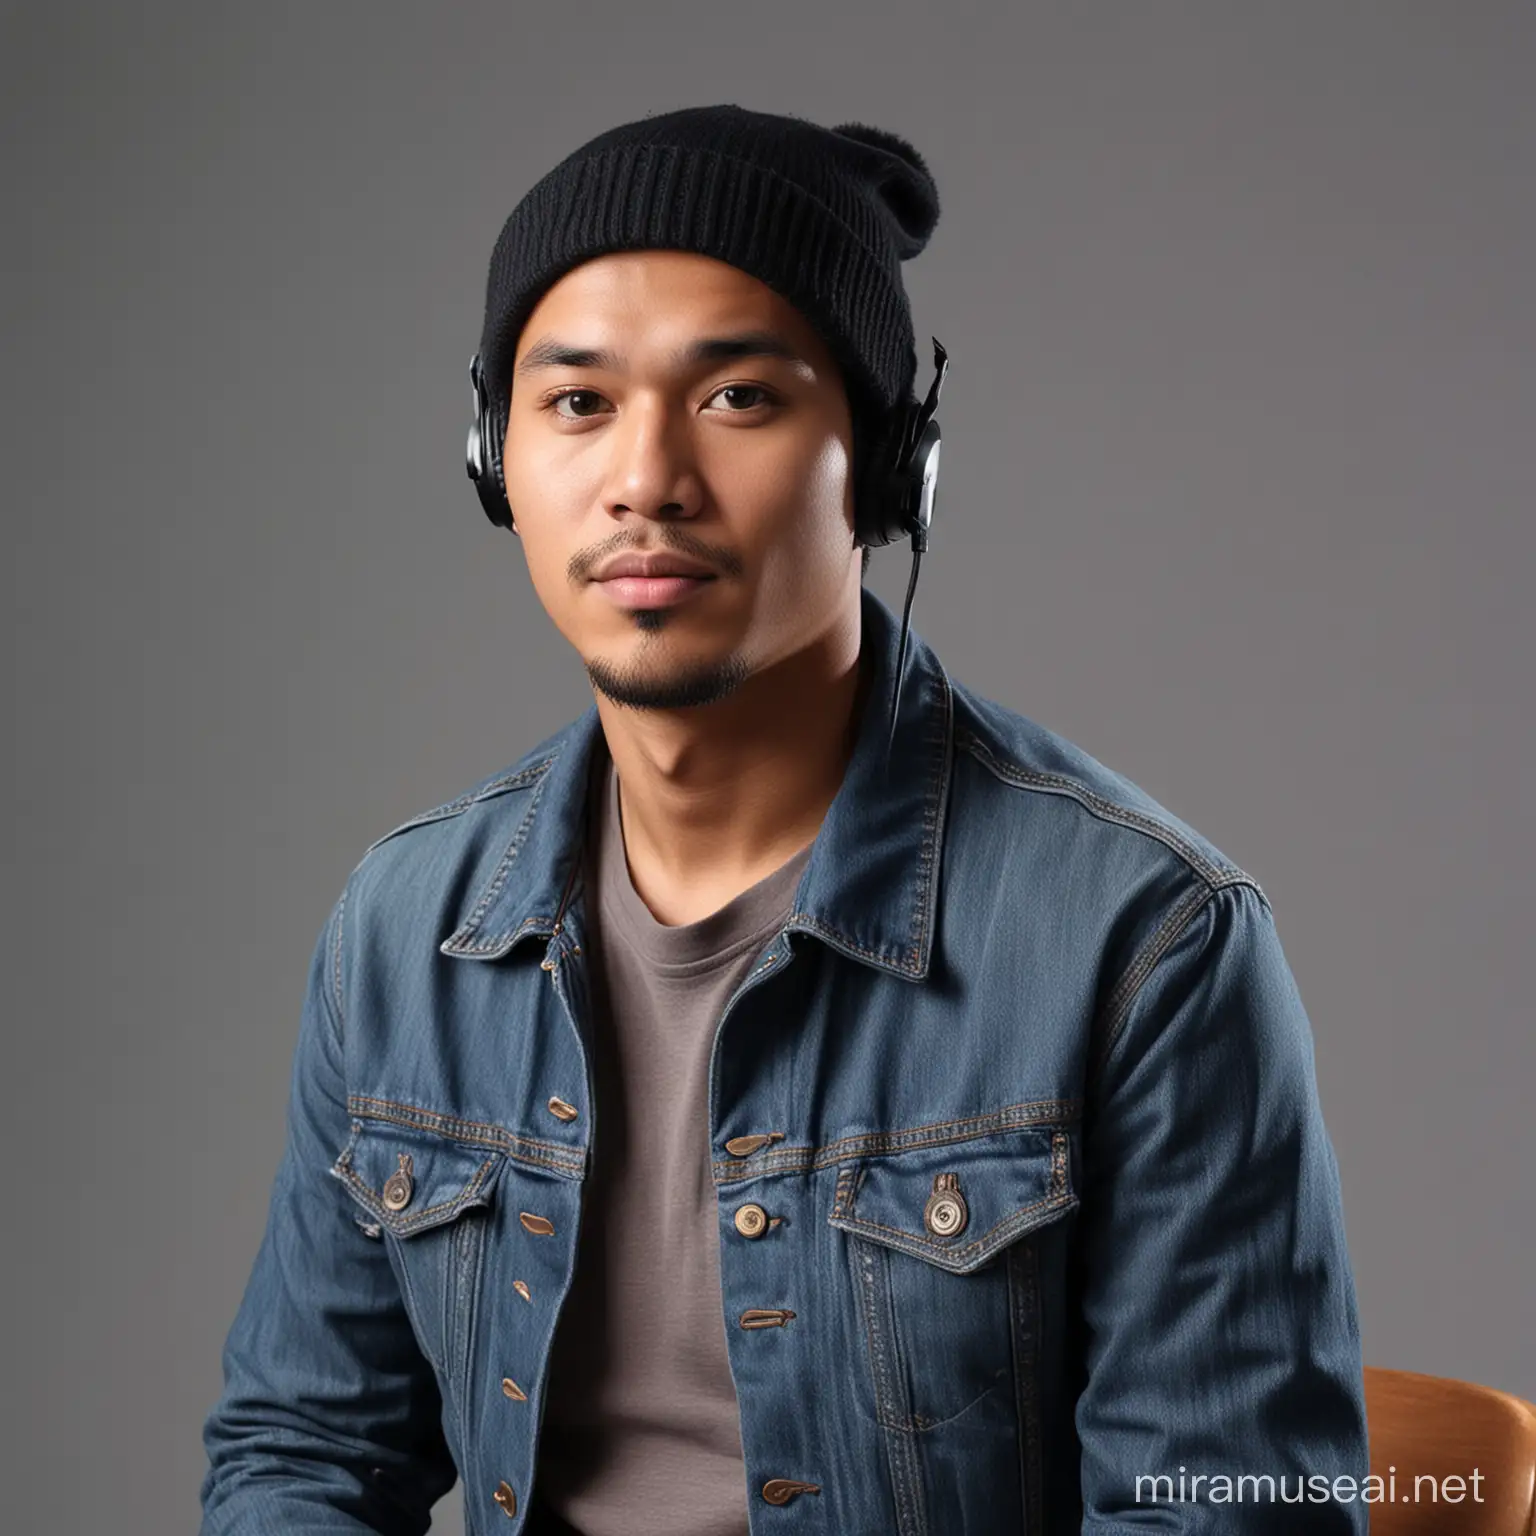 Indonesian Man in Stylish Denim Jacket Recording in Ultra HD Studio